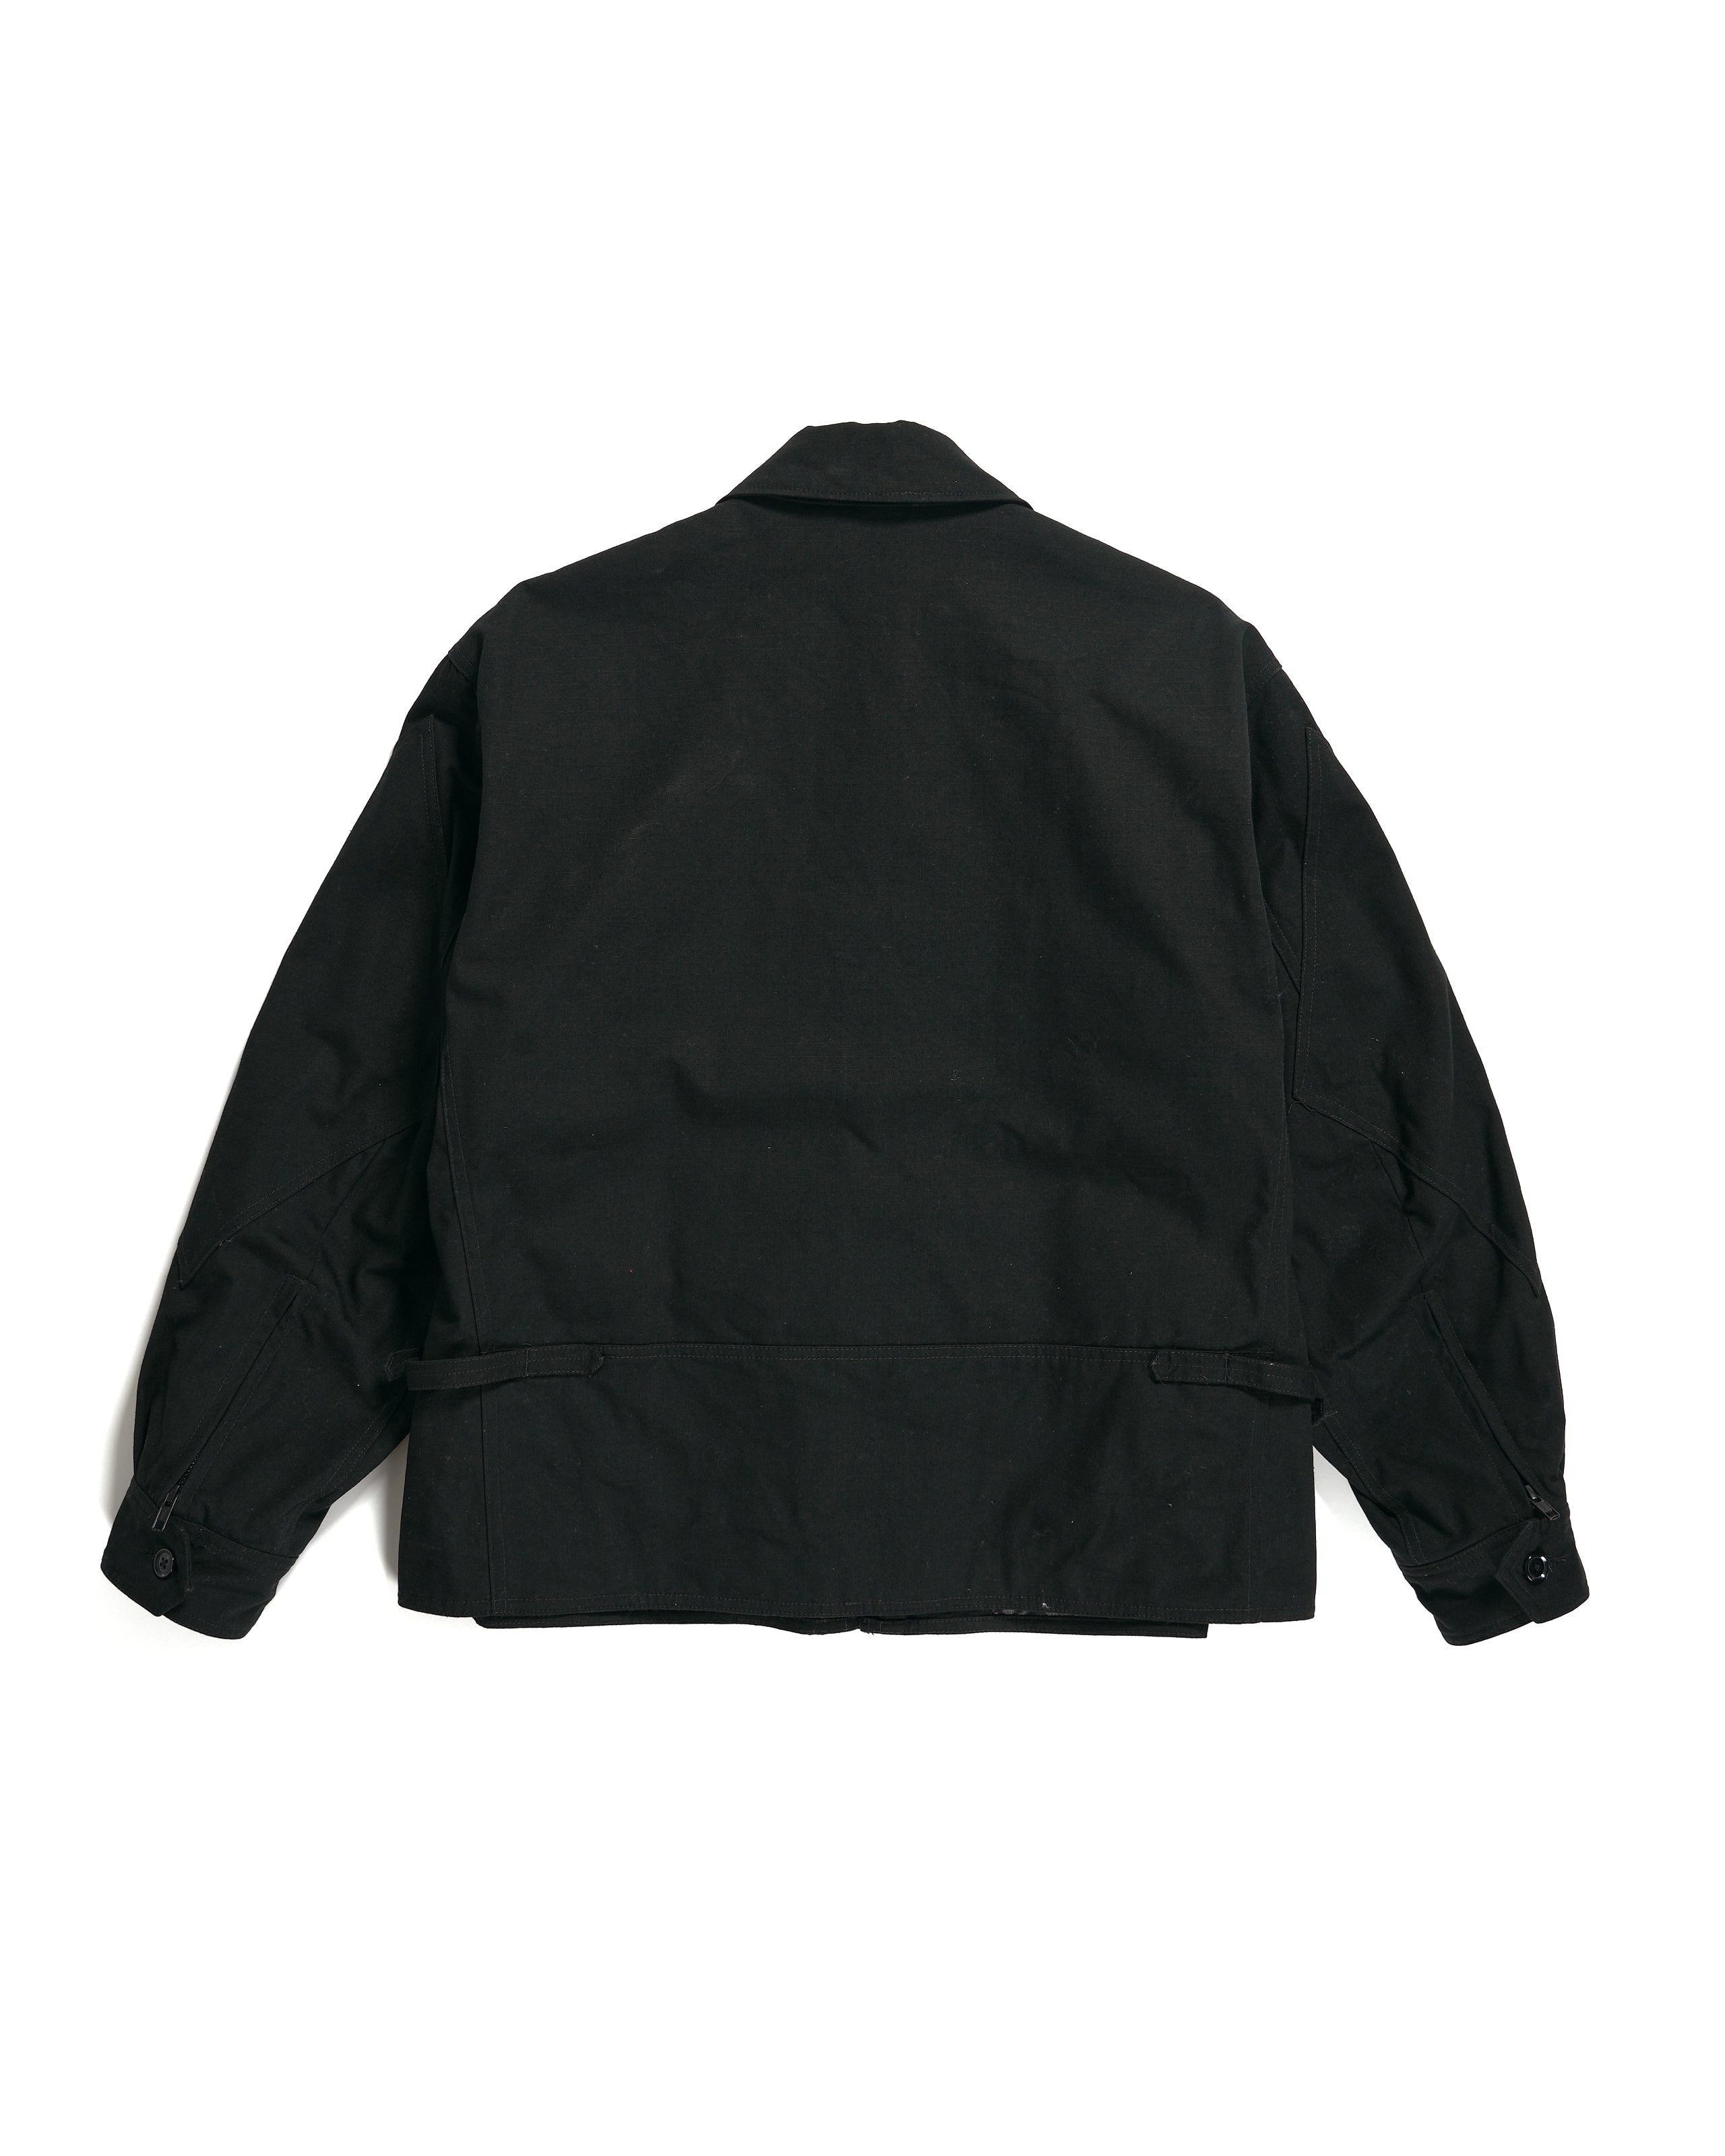 G8 Jacket - Black Heavyweight Cotton Ripstop